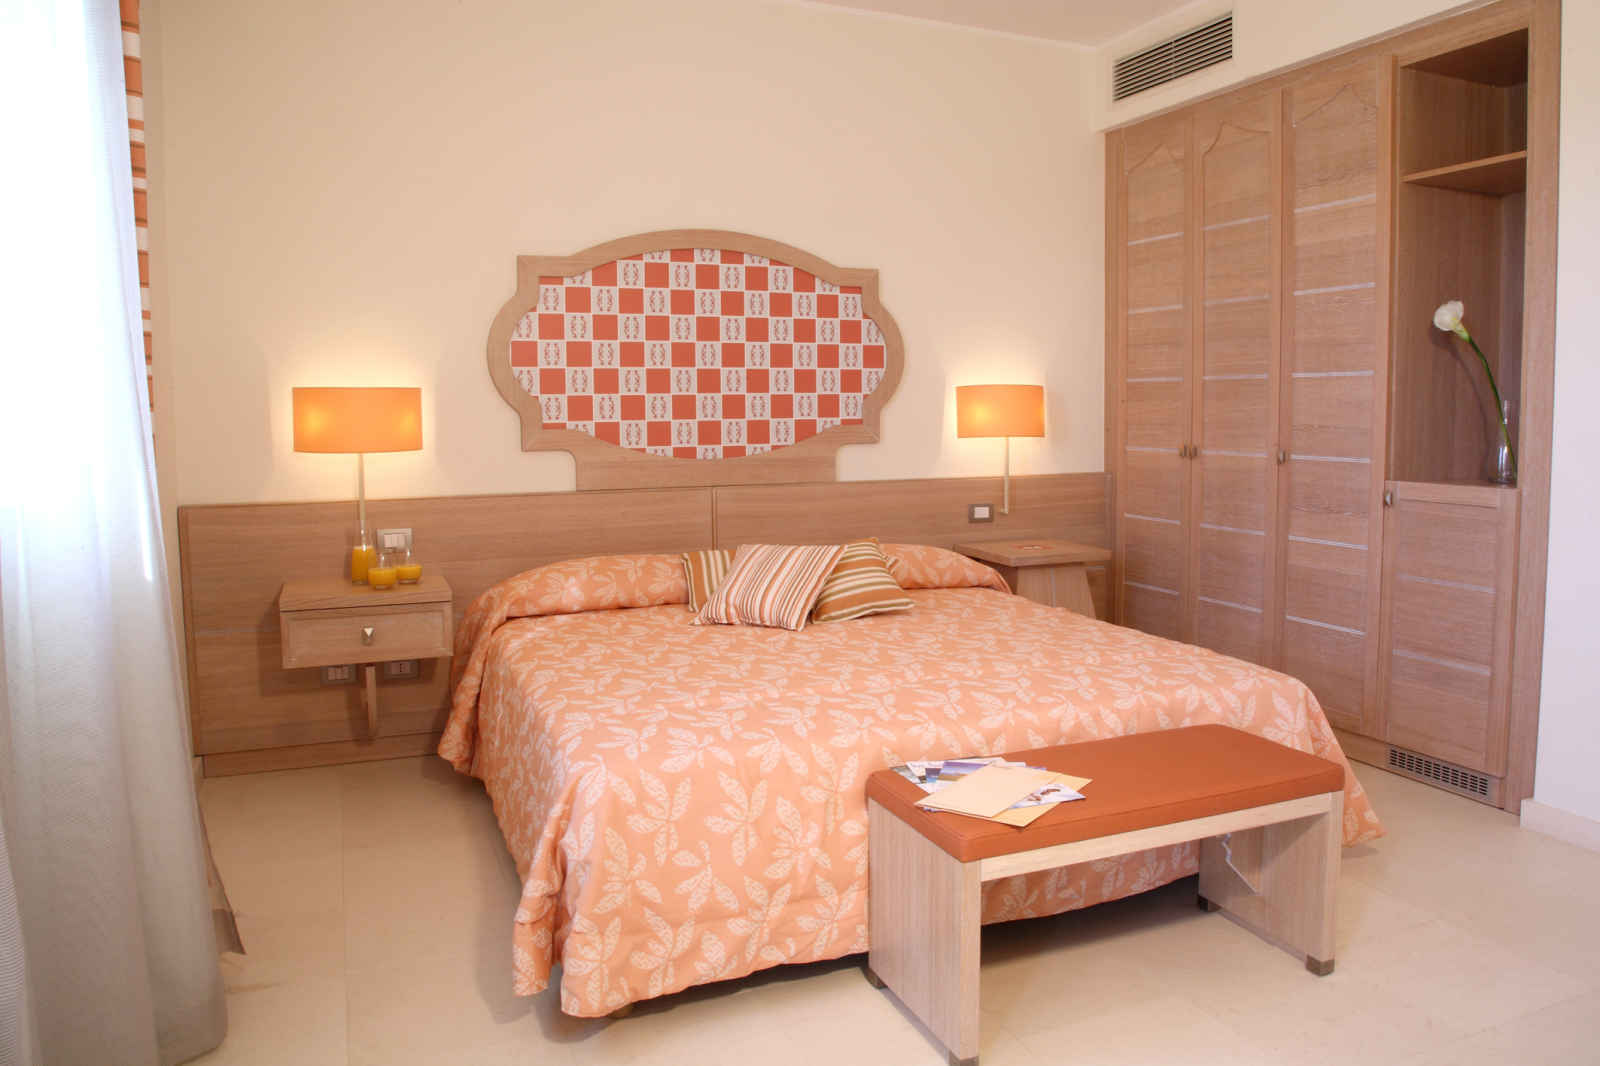 Italie - Pouilles - Hôtel Vivosa Apulia Resort 4*